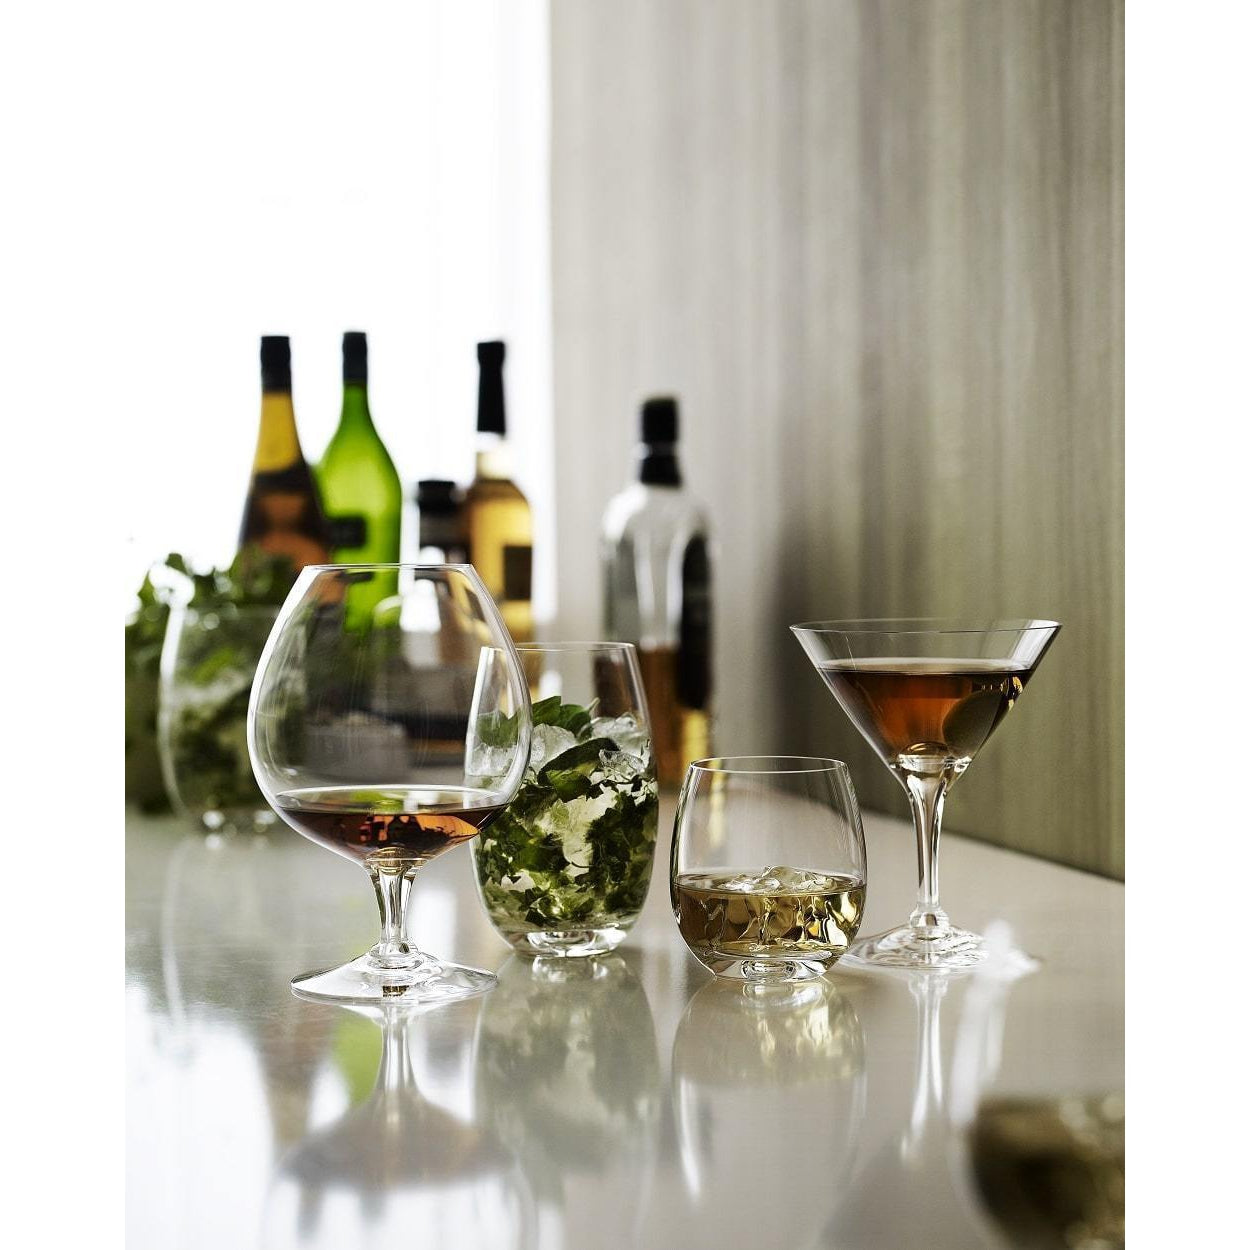 Holmegaard Glas champagne ideal